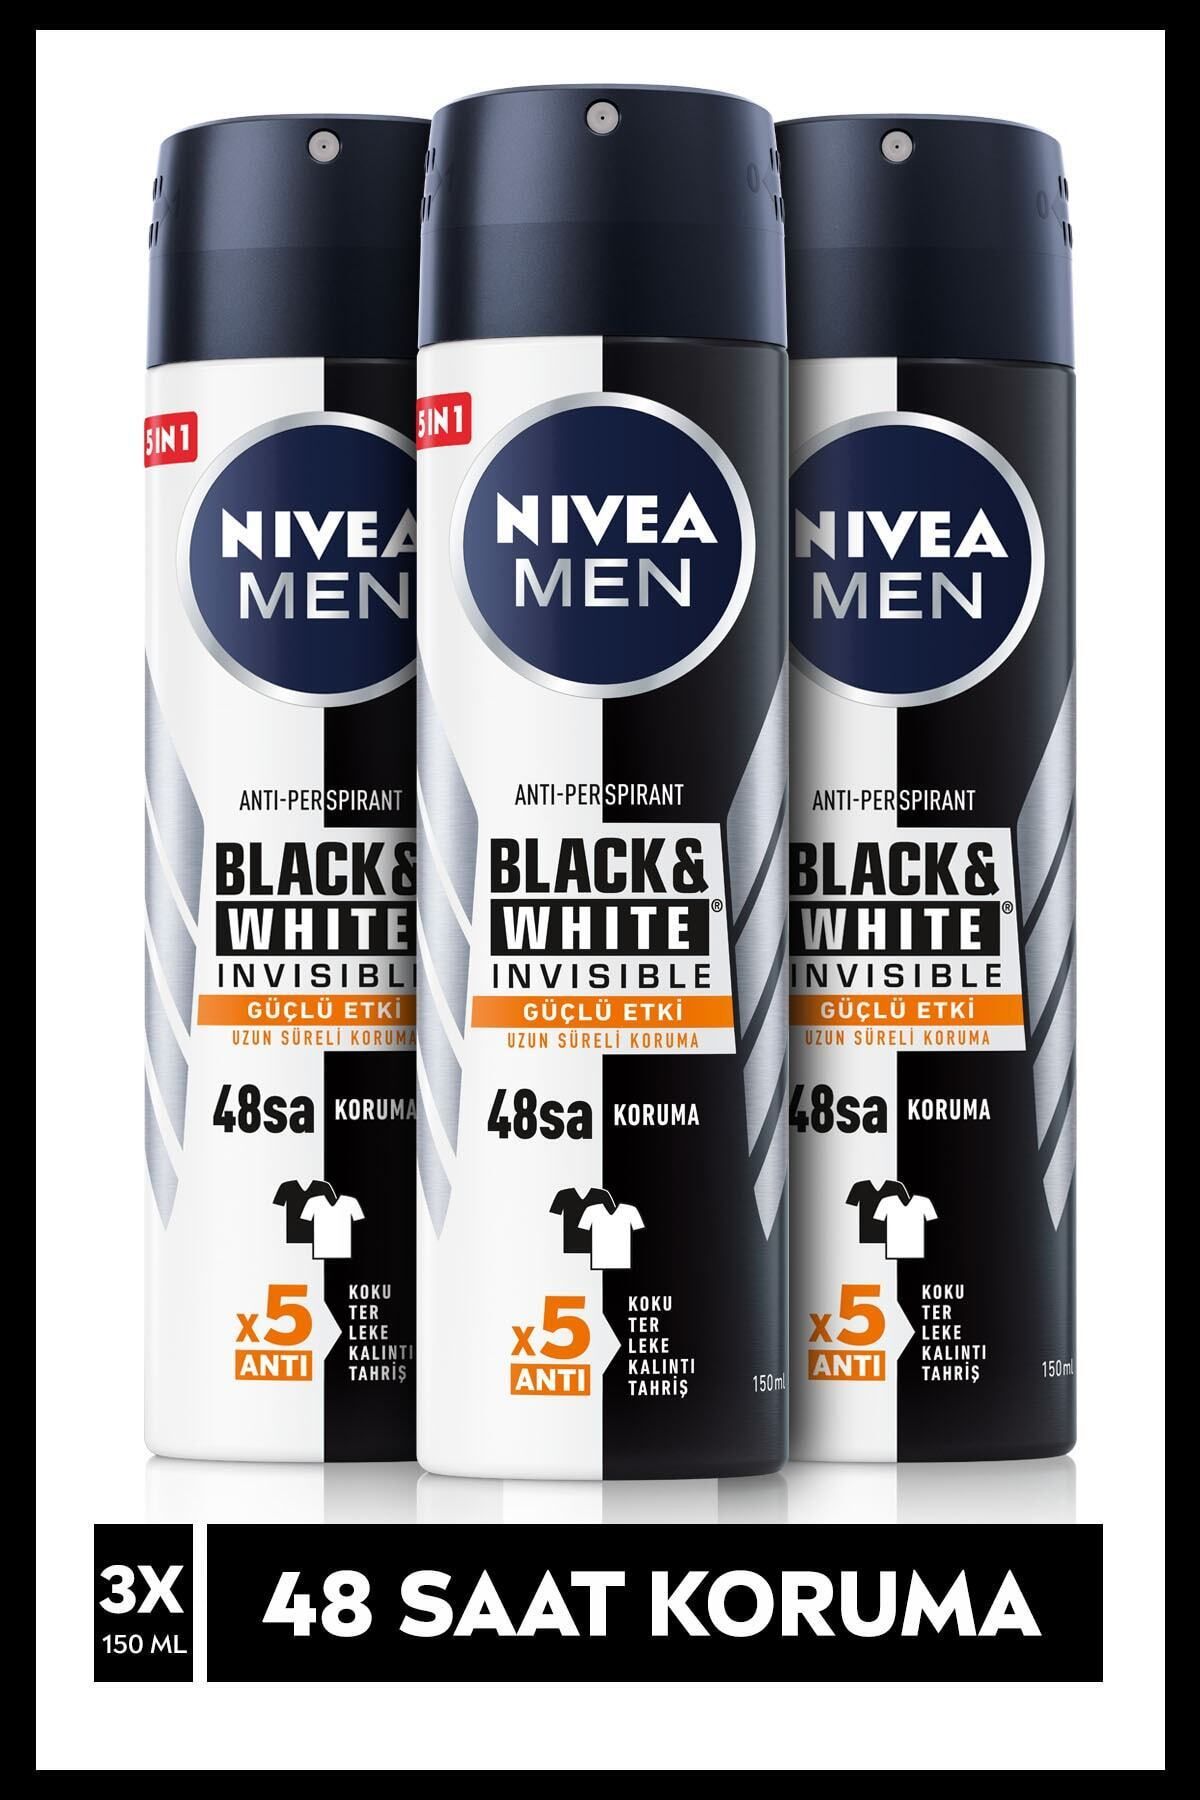 NIVEA Men Black&white Invisible Güçlü Etki Erkek Sprey Deodorant 150 ml X3 Adet,48 Saat Anti-perspirant